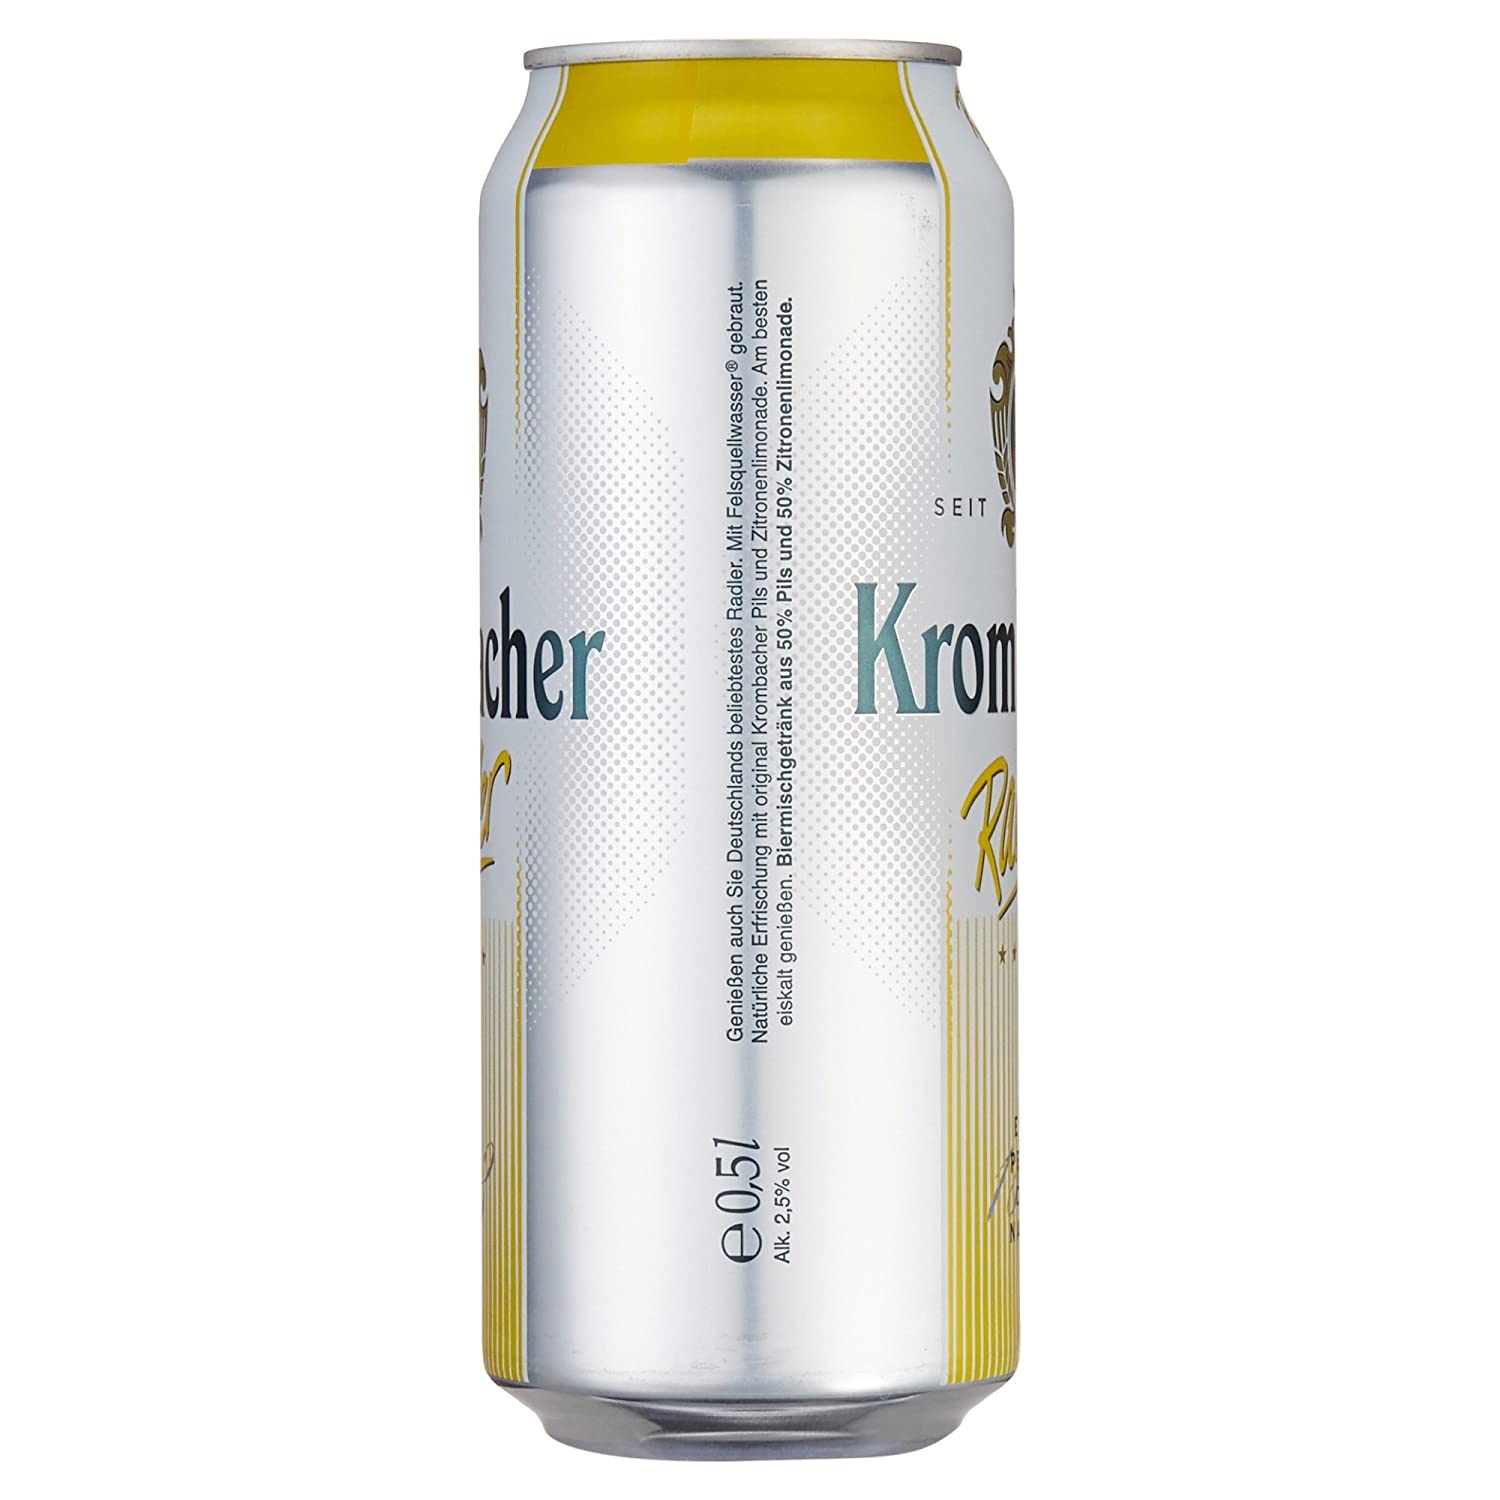 Krombacher Radler 0,5l in der Dose mit 2,5% Vol.